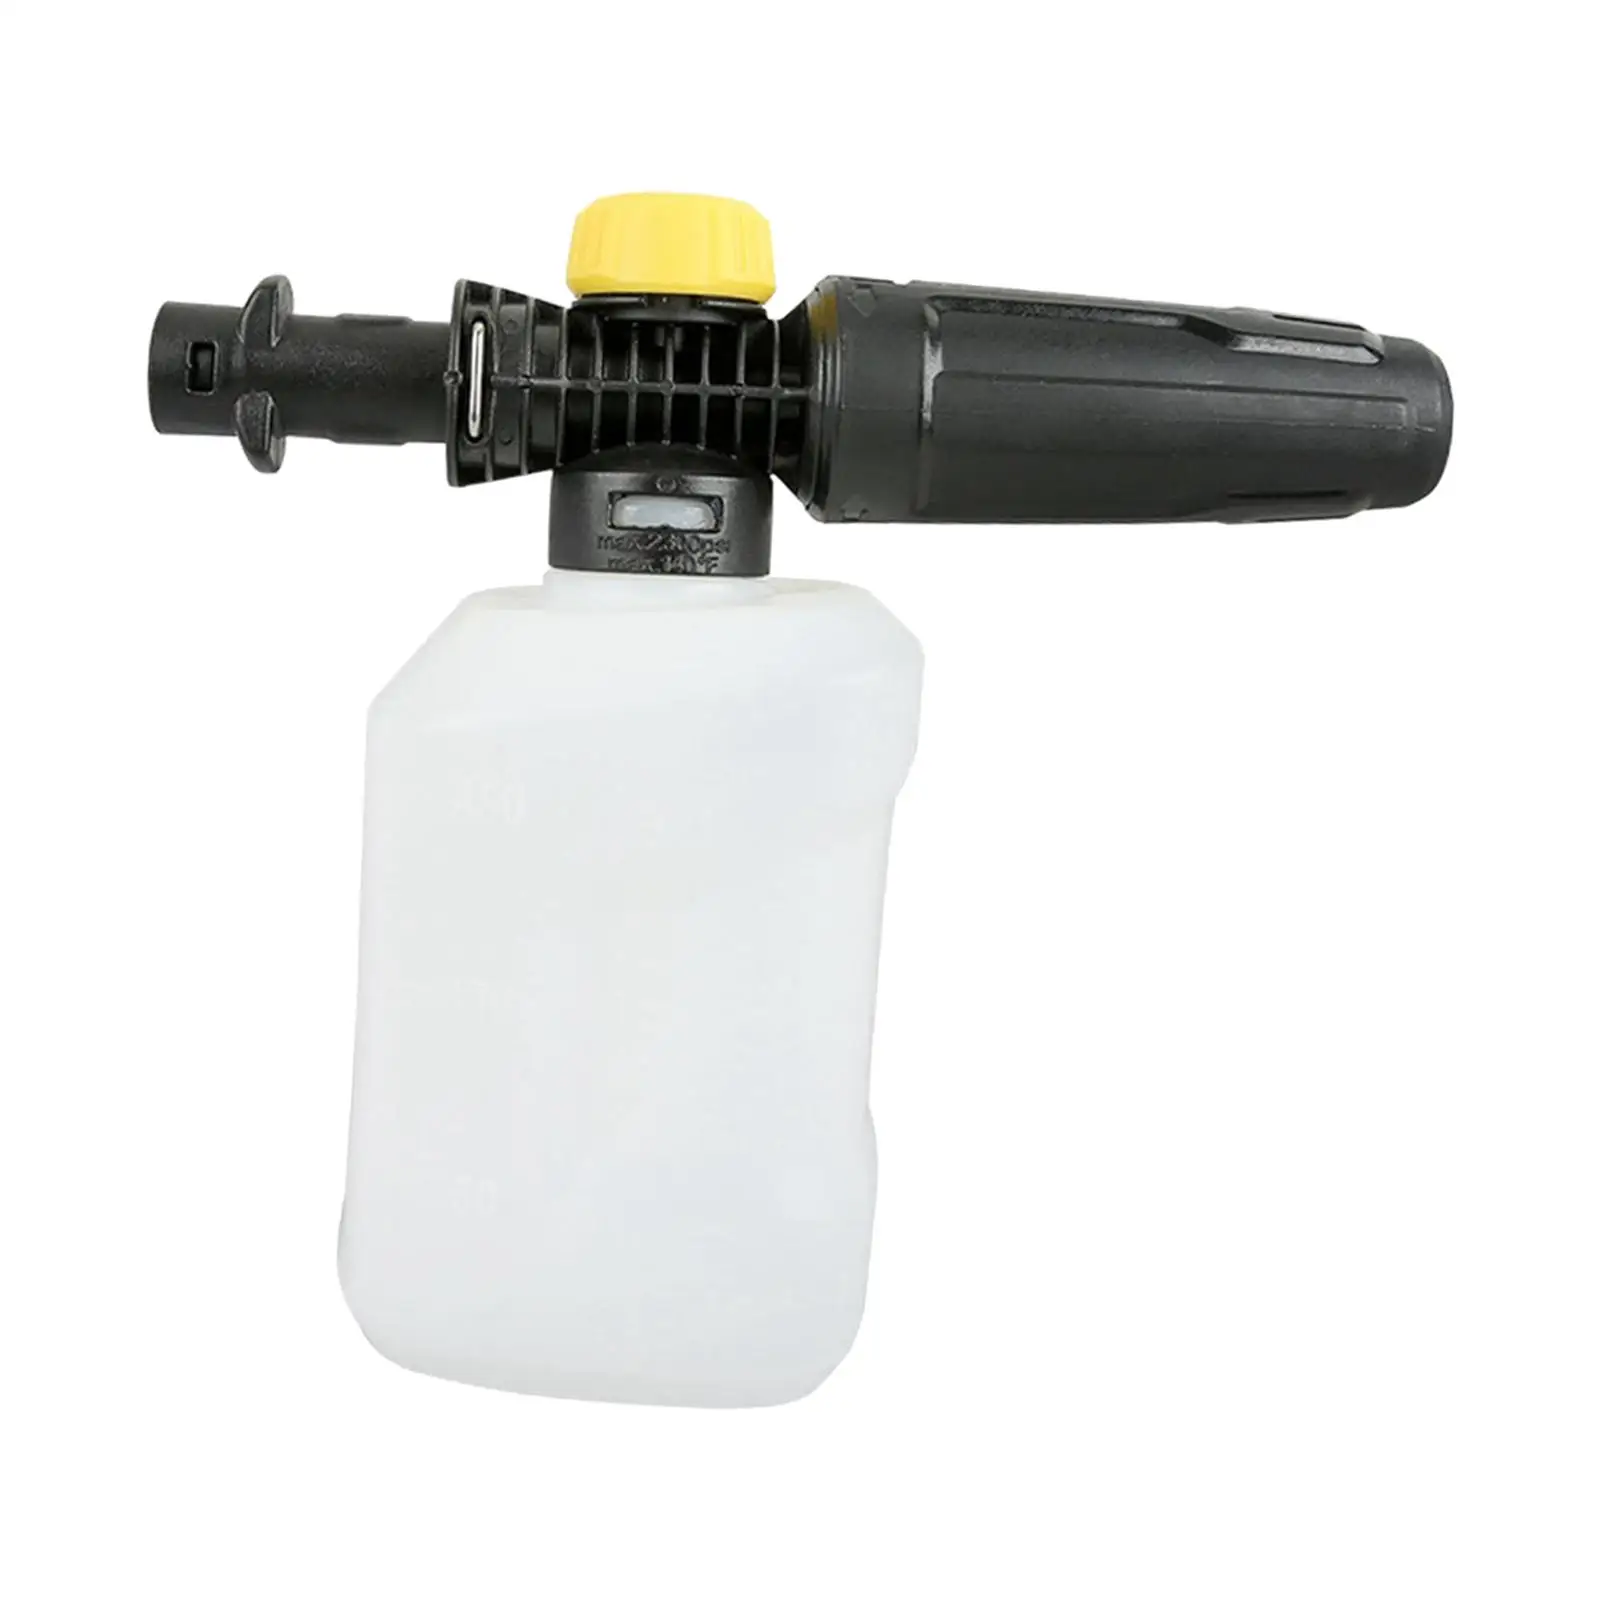 Portable Foaming Sprayer Water Sprayer Foam Watering Can Car Wash Sprayer for Flowers Watering Car Cleaning Patio Garden Lawn